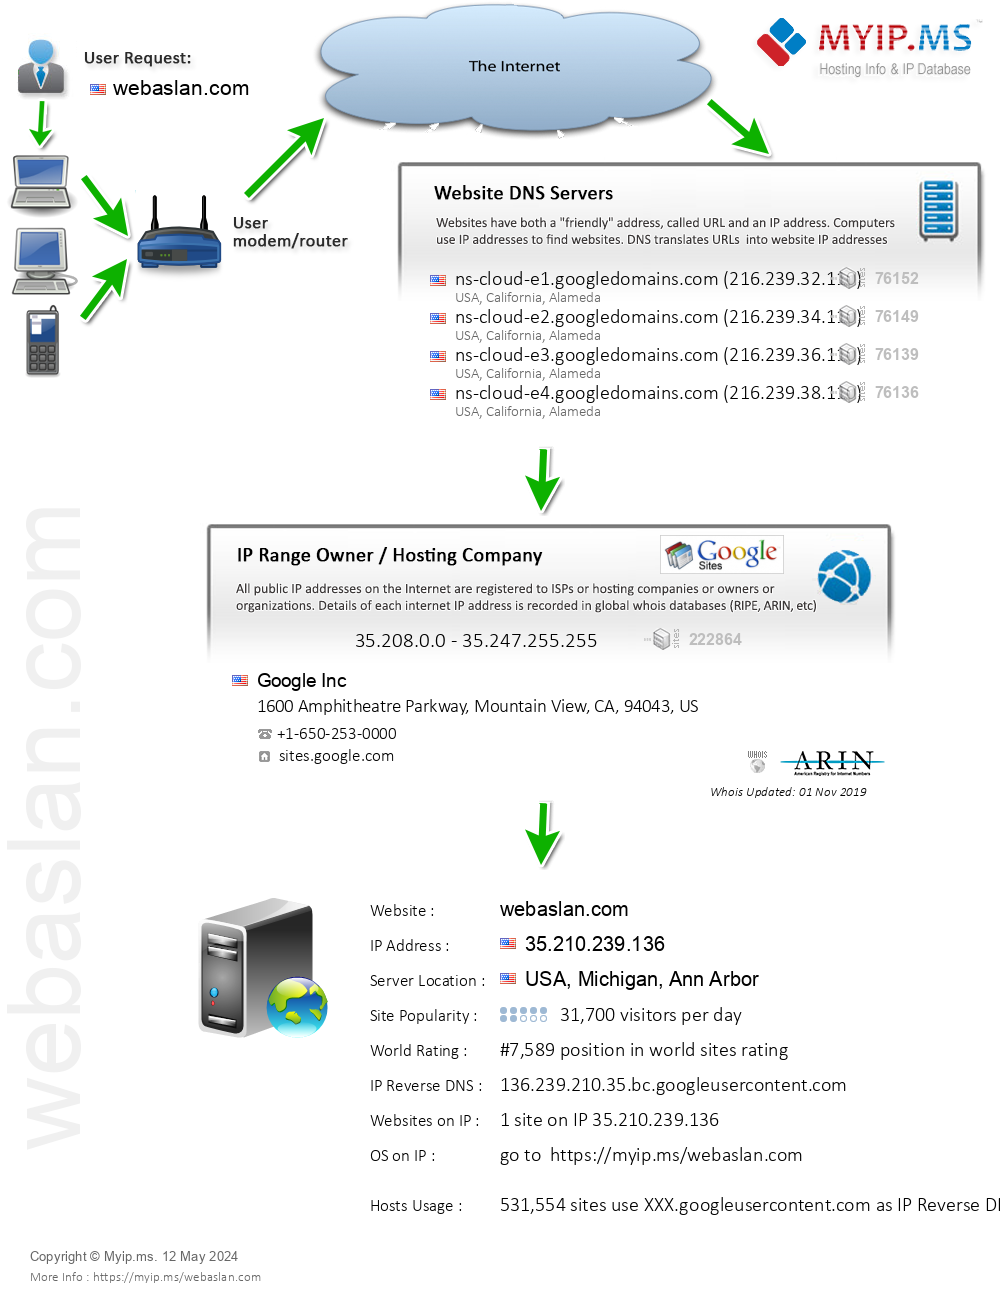 Webaslan.com - Website Hosting Visual IP Diagram